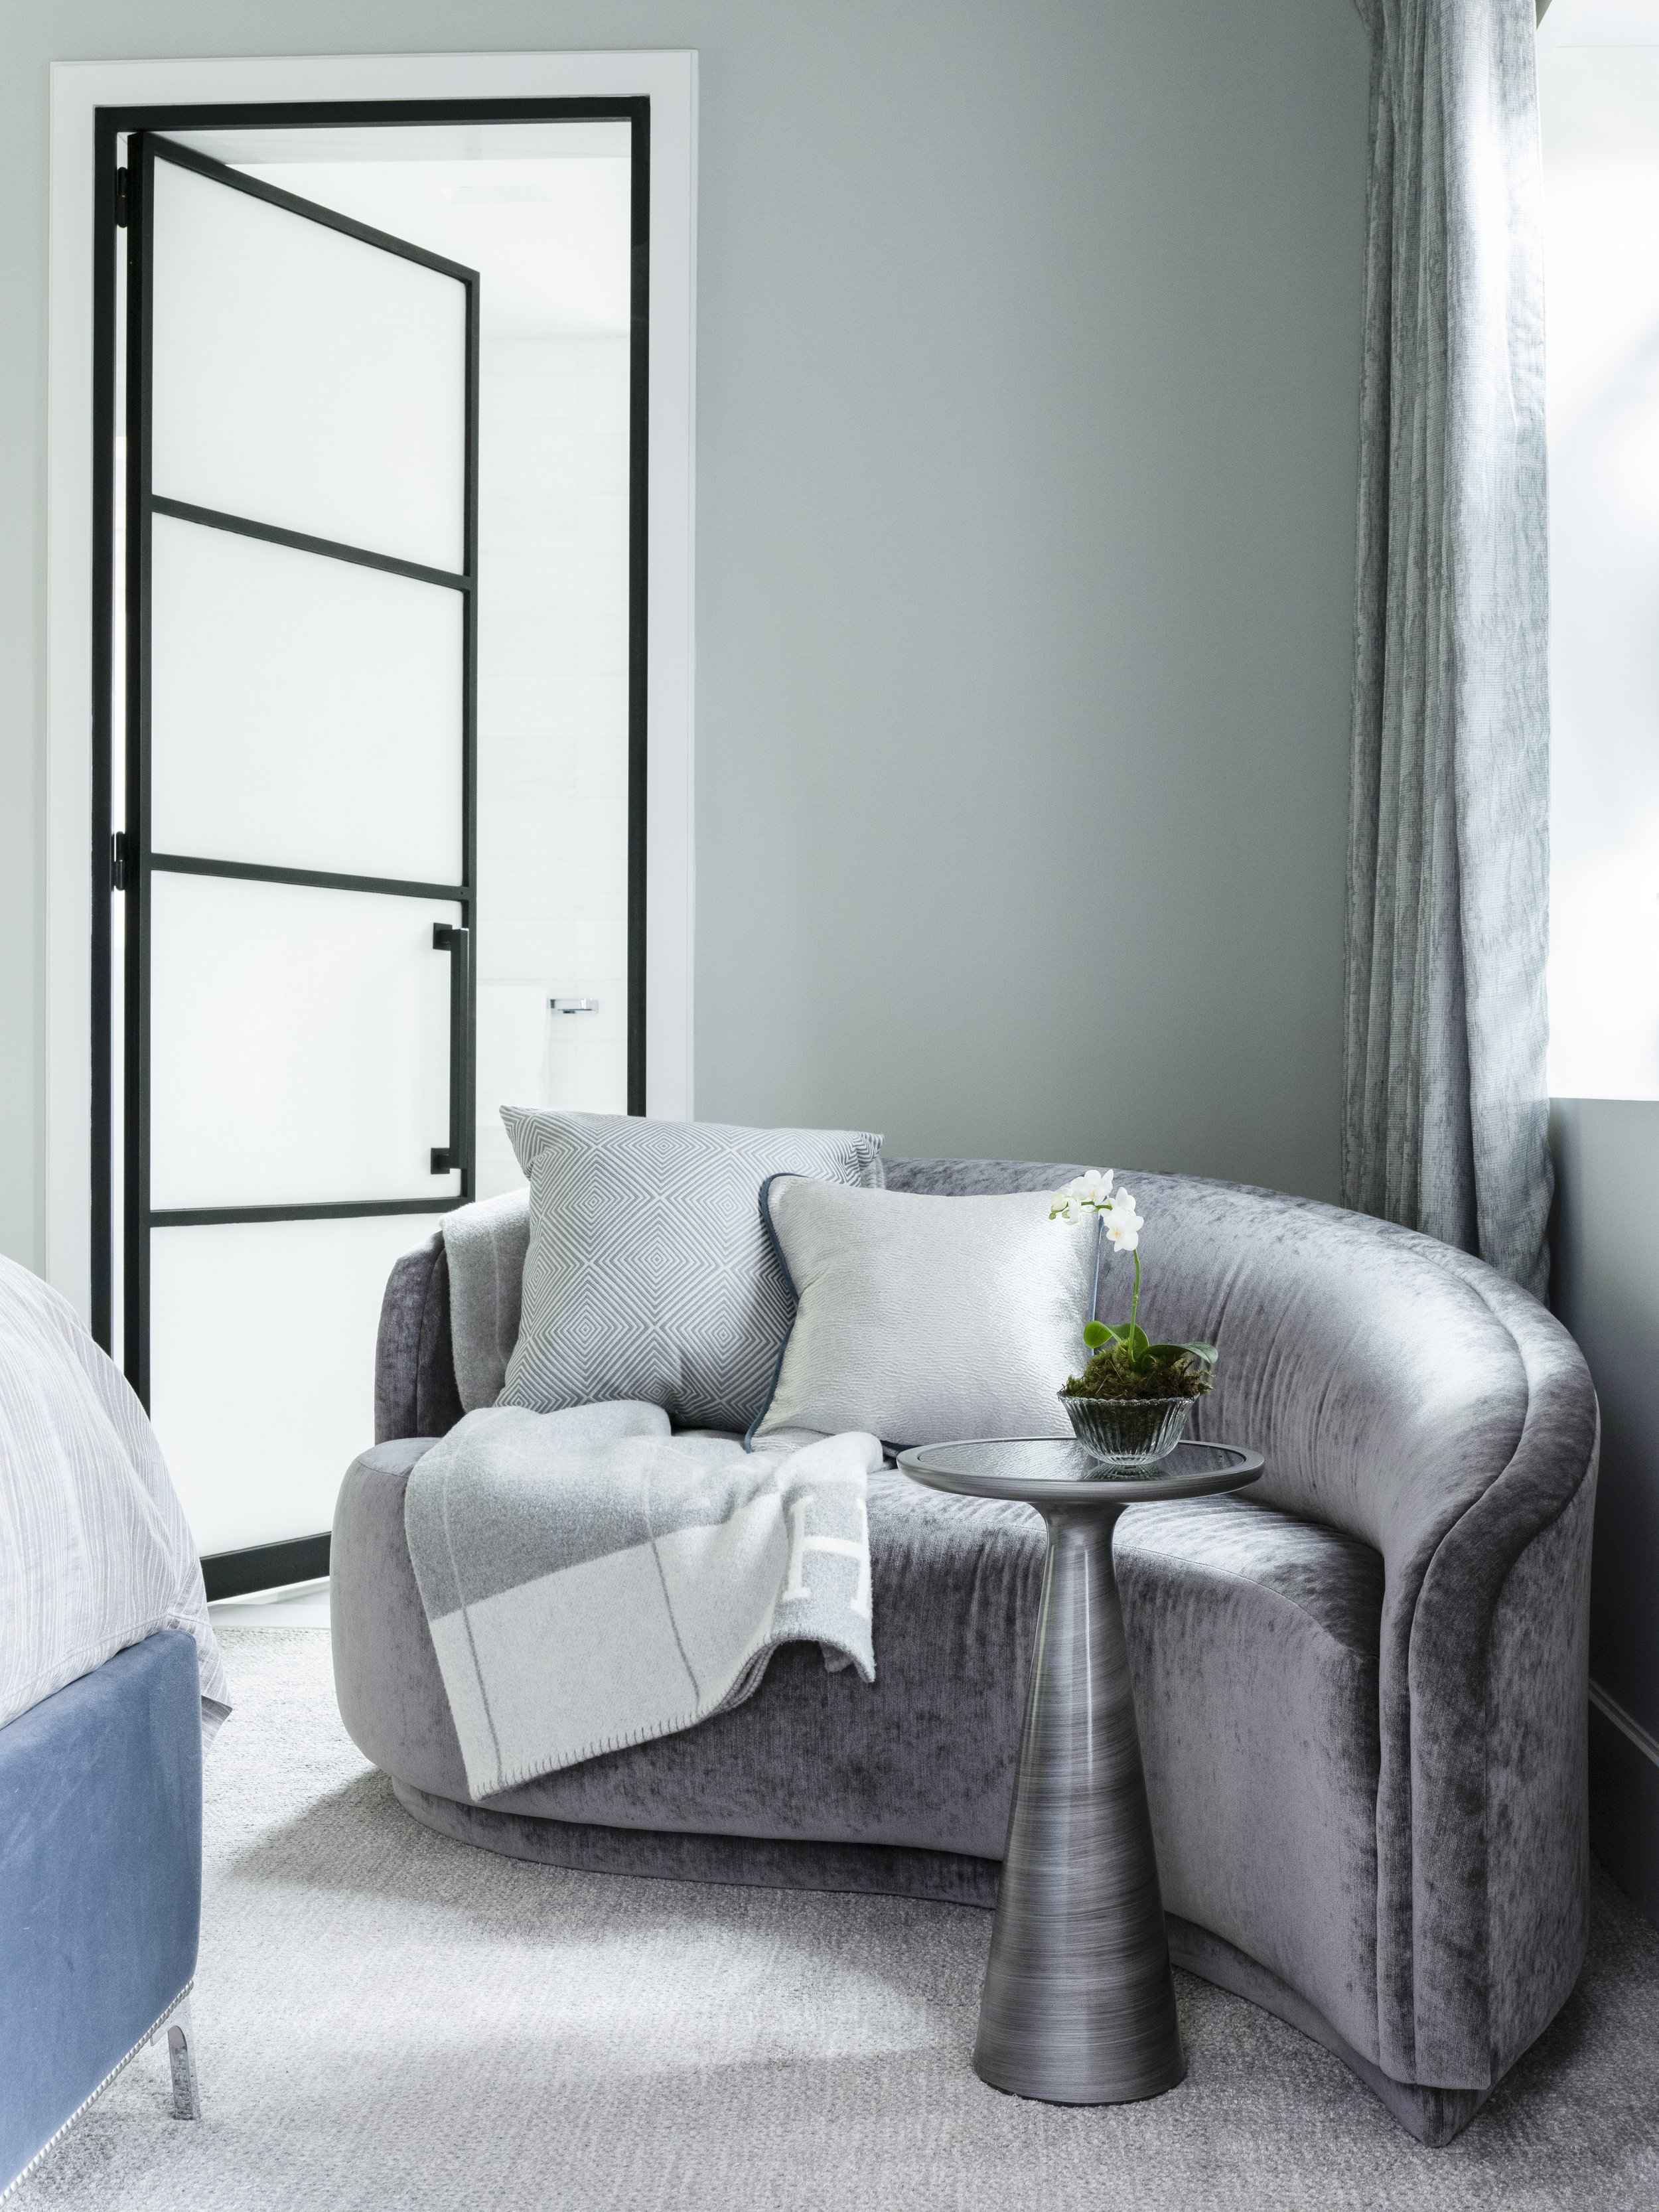 17-cool-gray-chaise-lounge-velvet-bedroom-seating-modern-look-manhattan-penthouse-rinfret-interior-designs..jpg